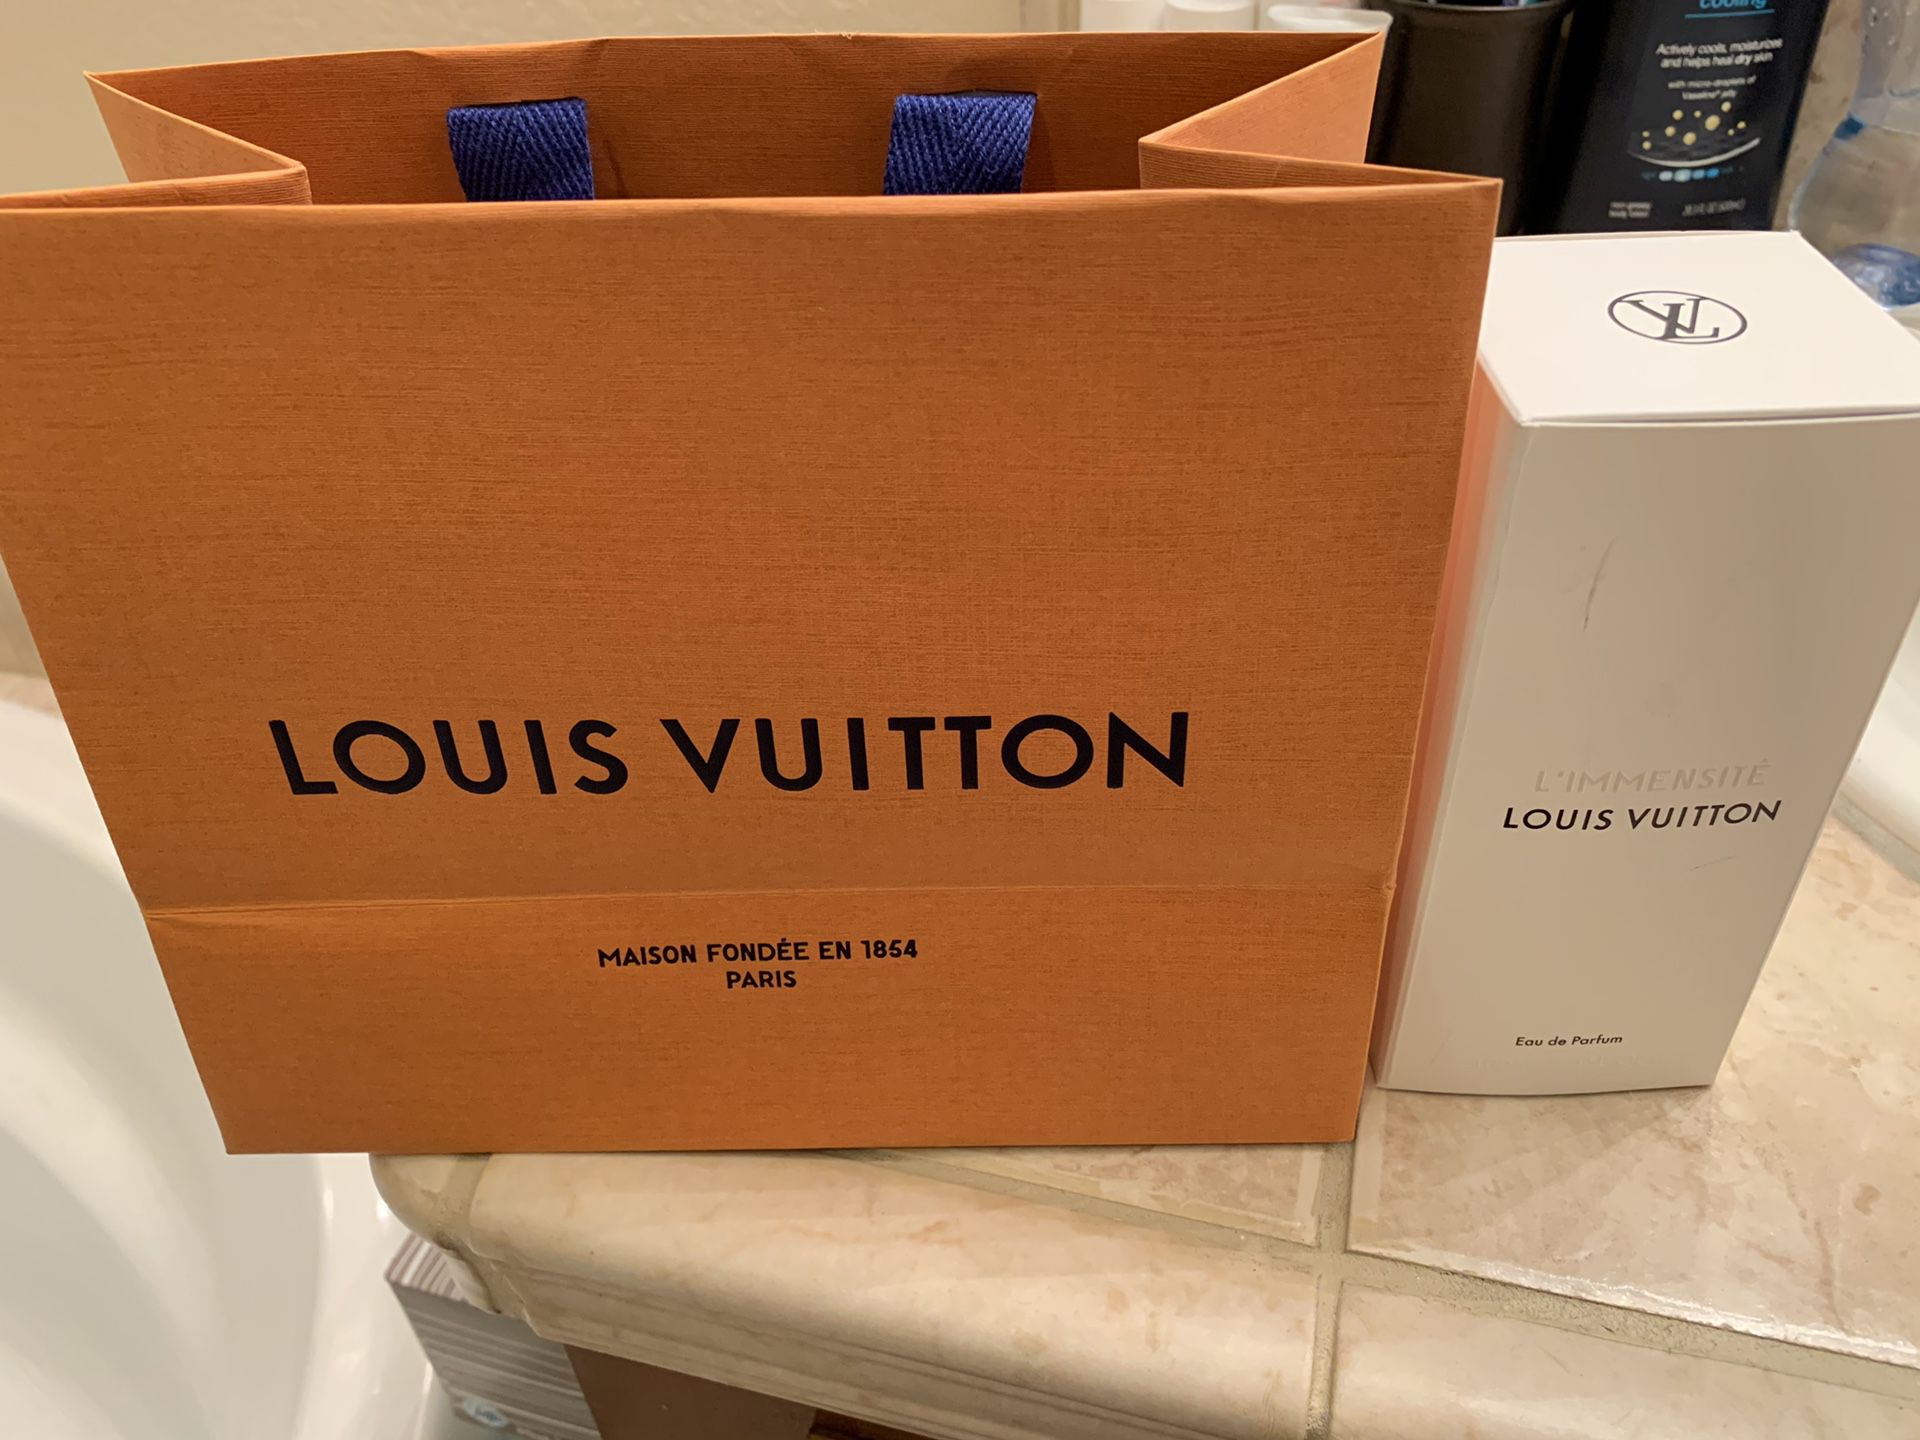 Louis Vuitton L'immensite Mens “CEO” Cologne for Sale in San Jose, CA -  OfferUp